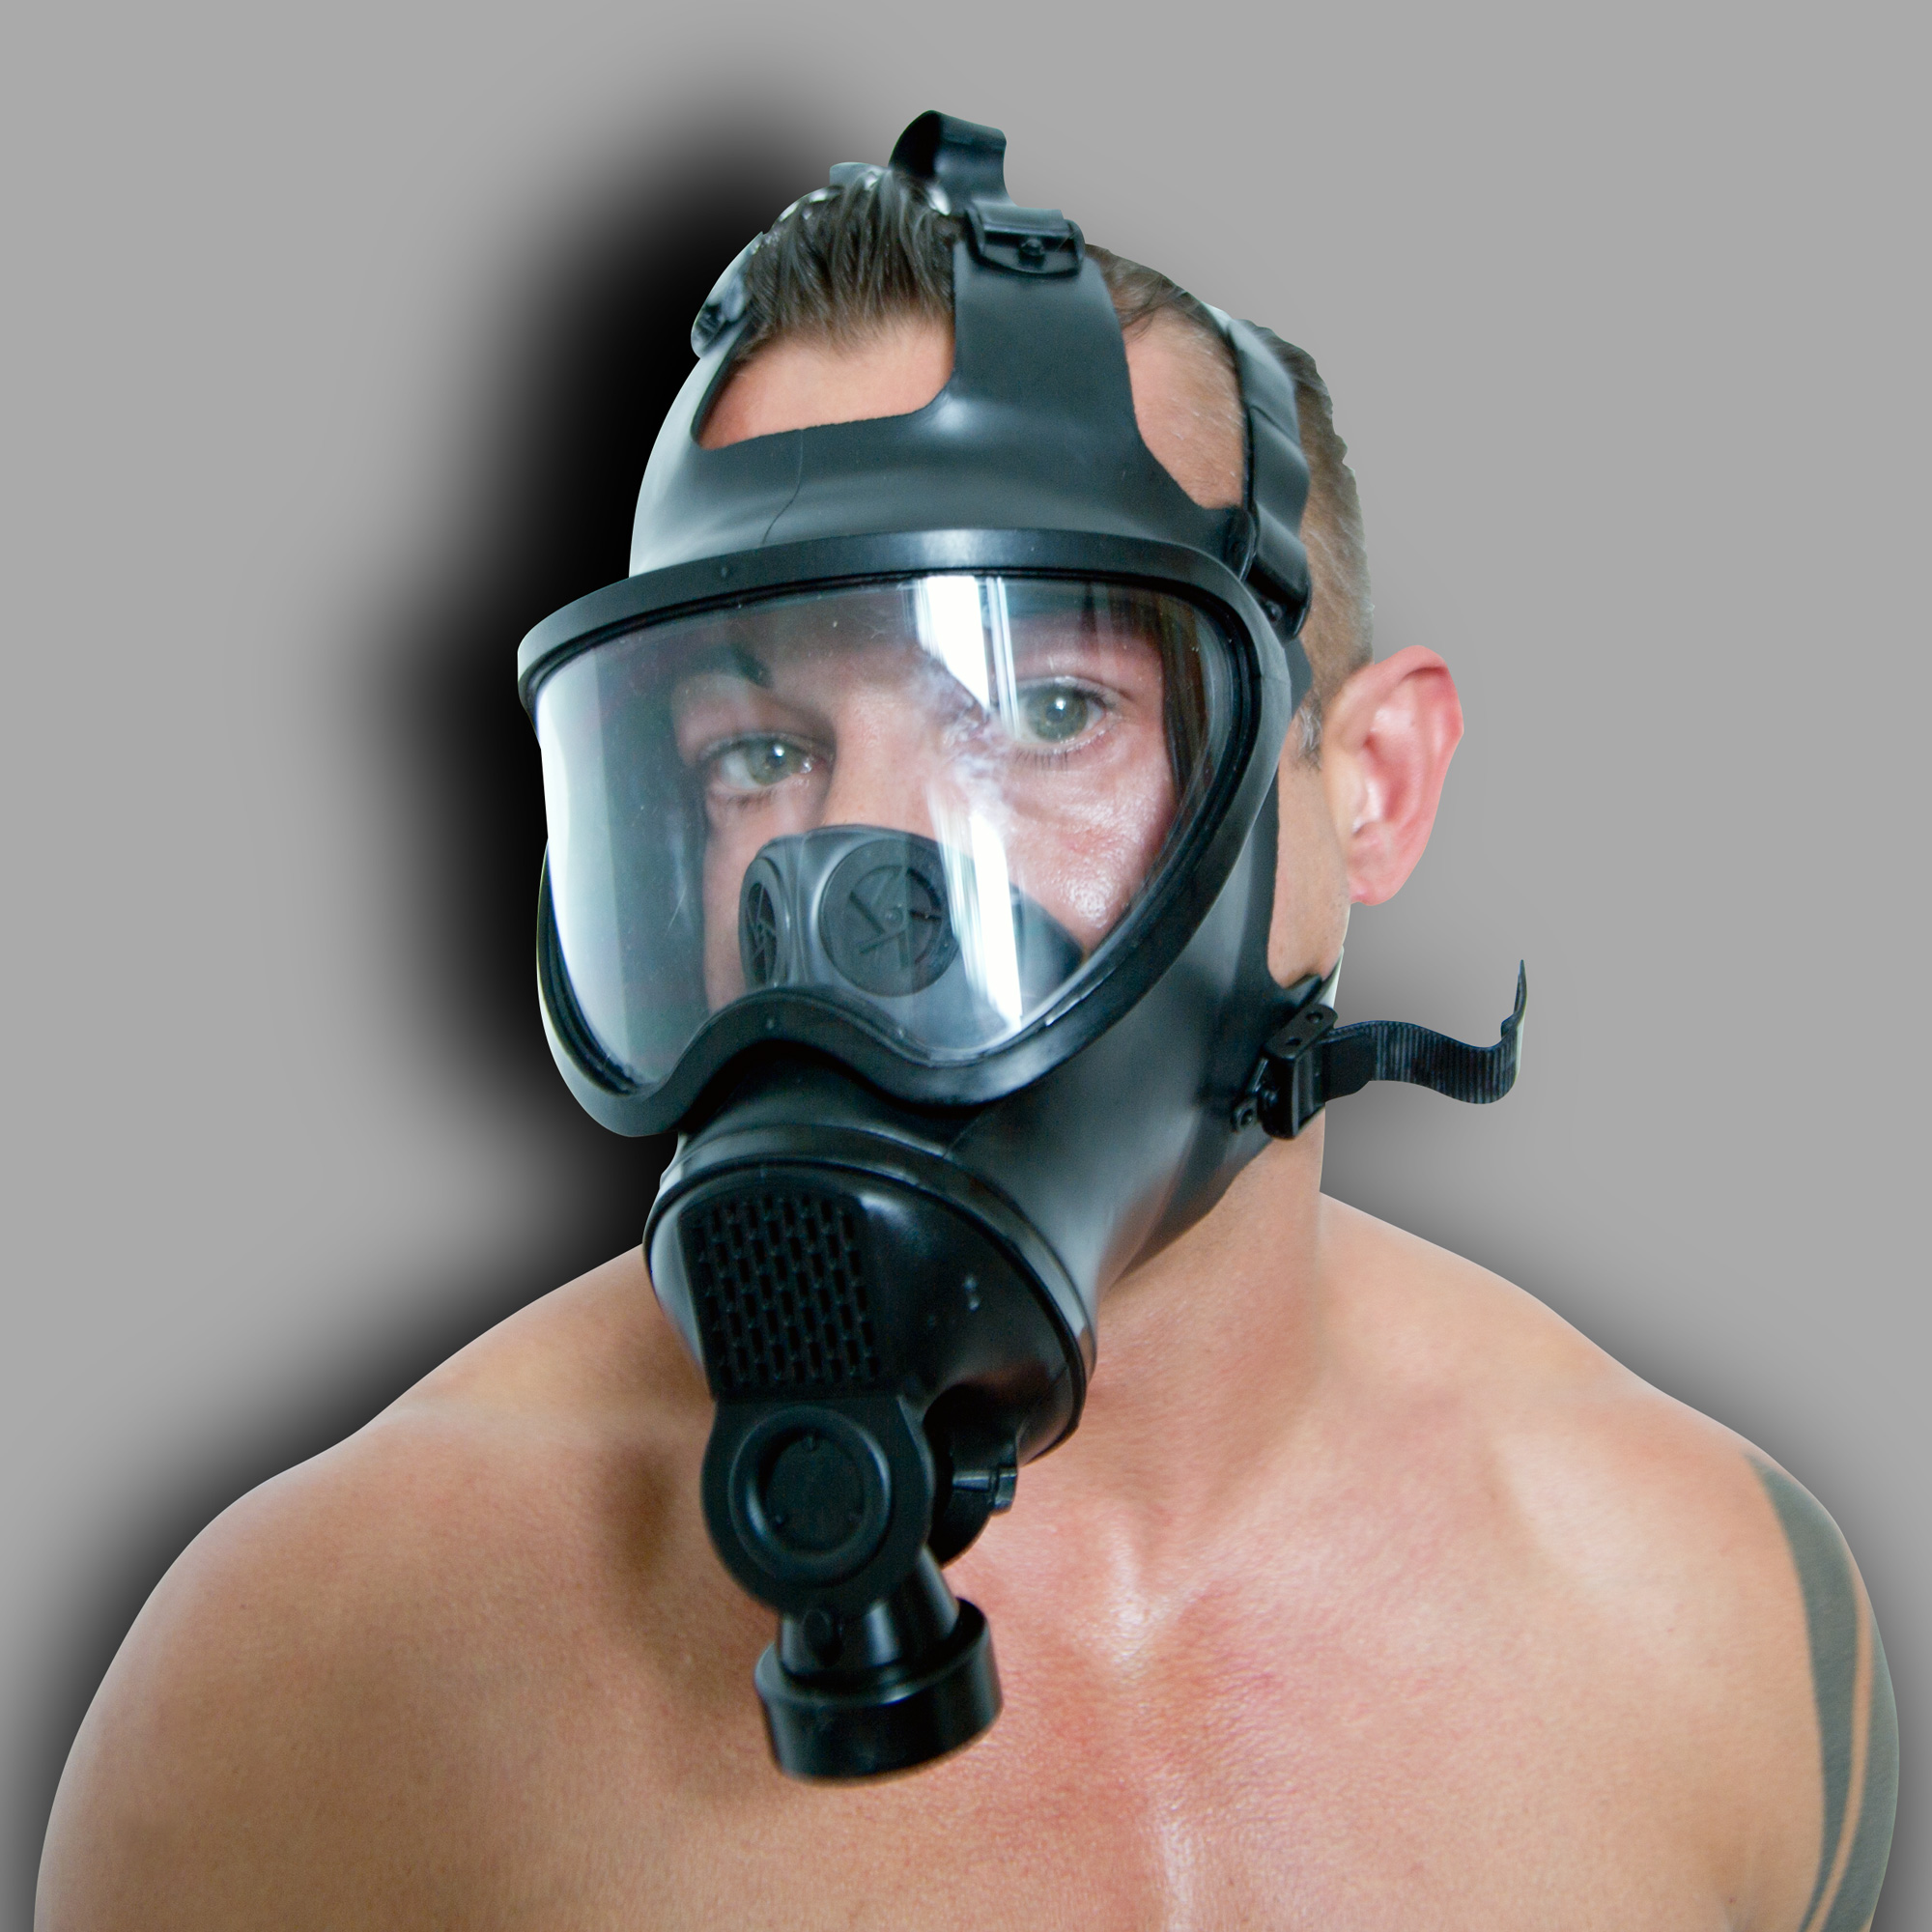 Deep inhale gas mask fetish women